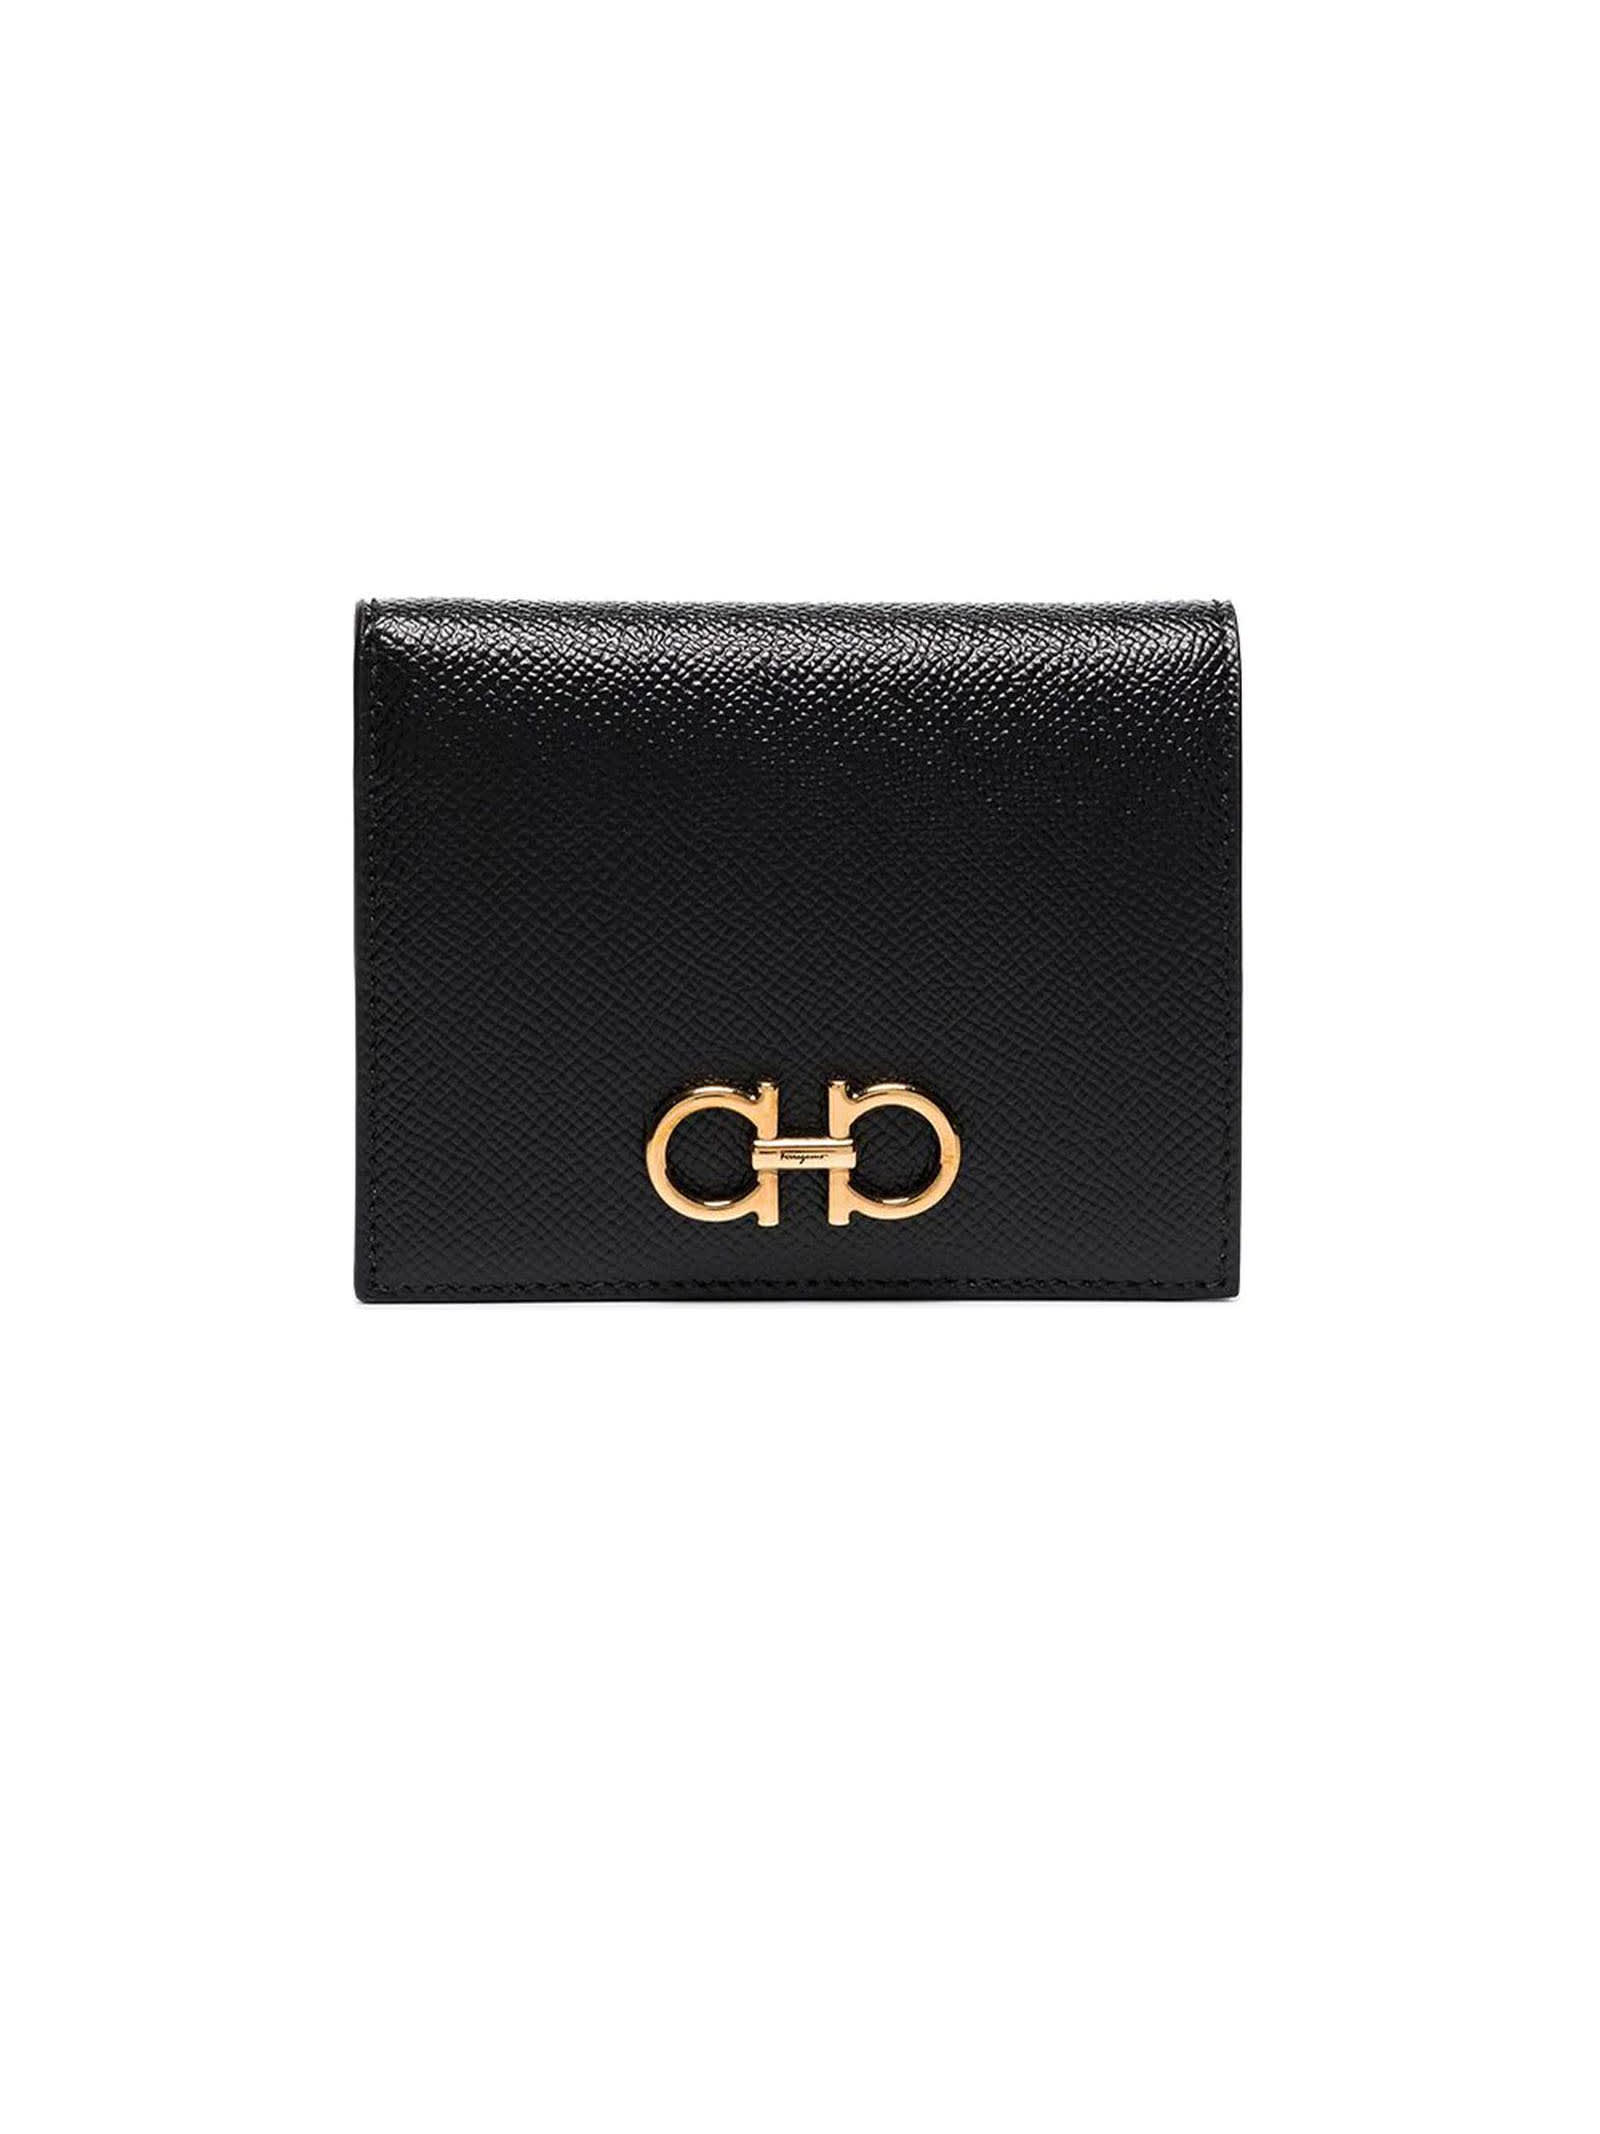 Salvatore Ferragamo Black Calf Leather Gancini Folding Wallet